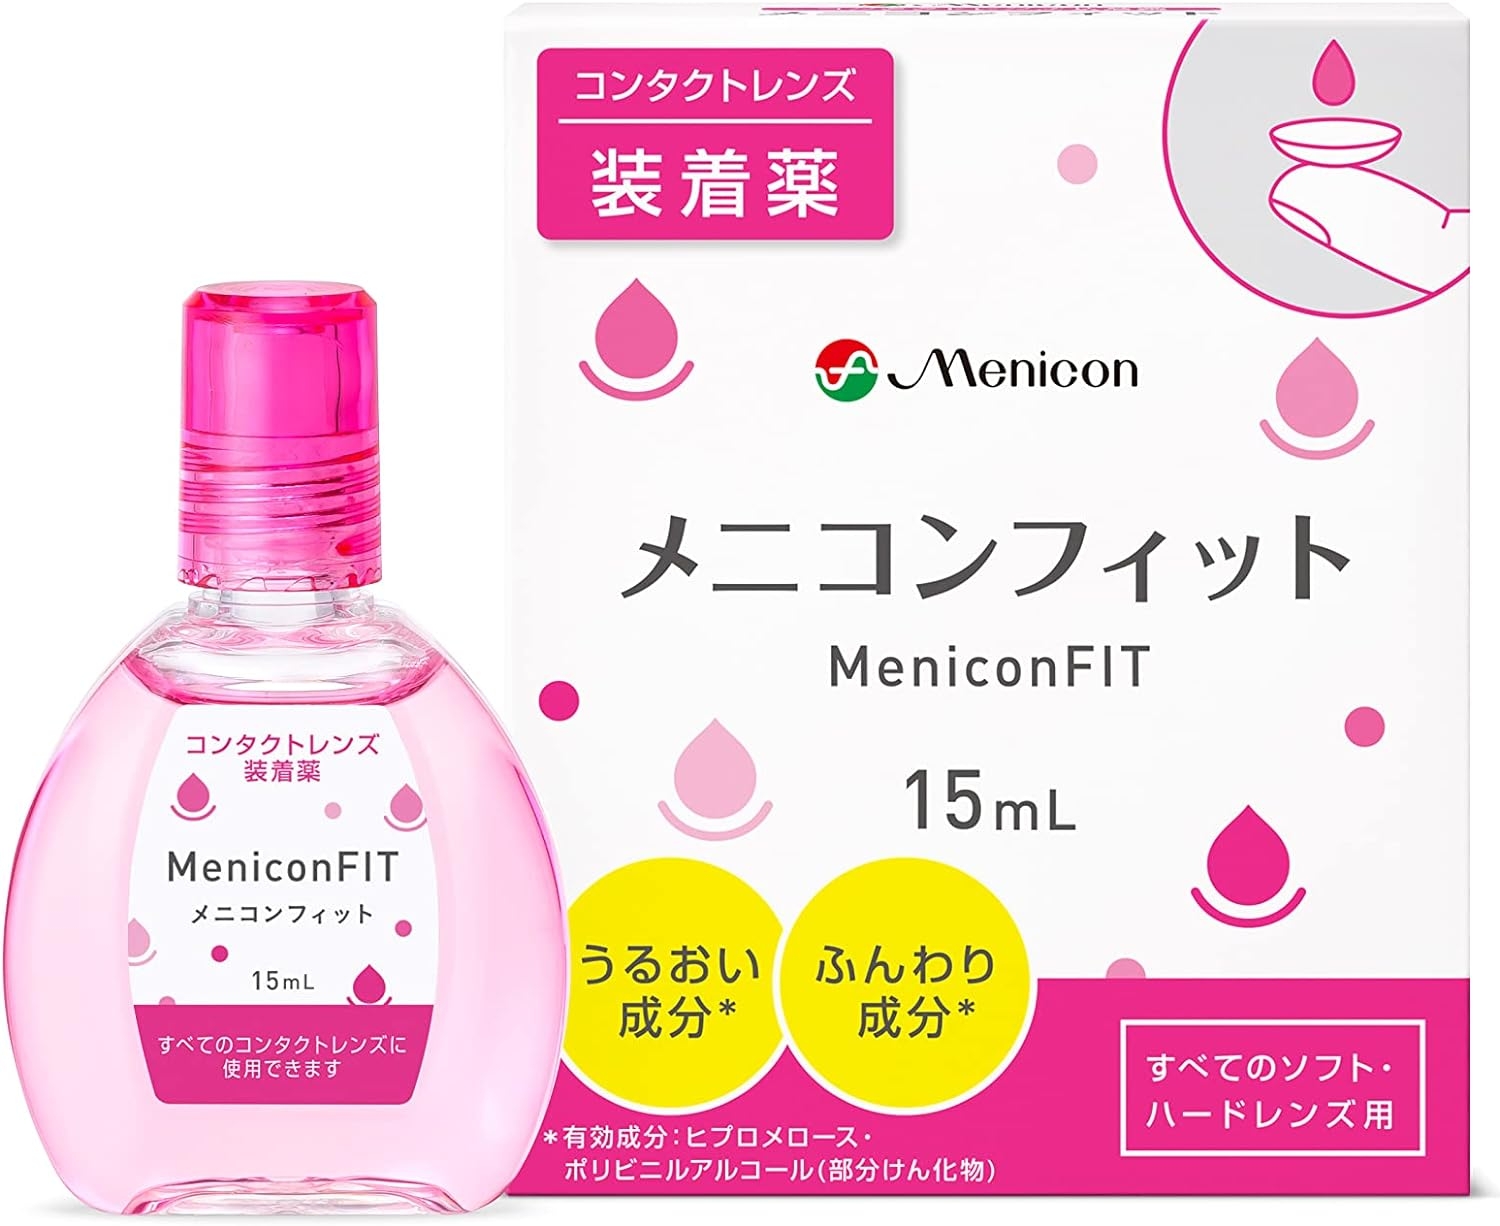 Menicon(メニコン) フィットの商品画像1 